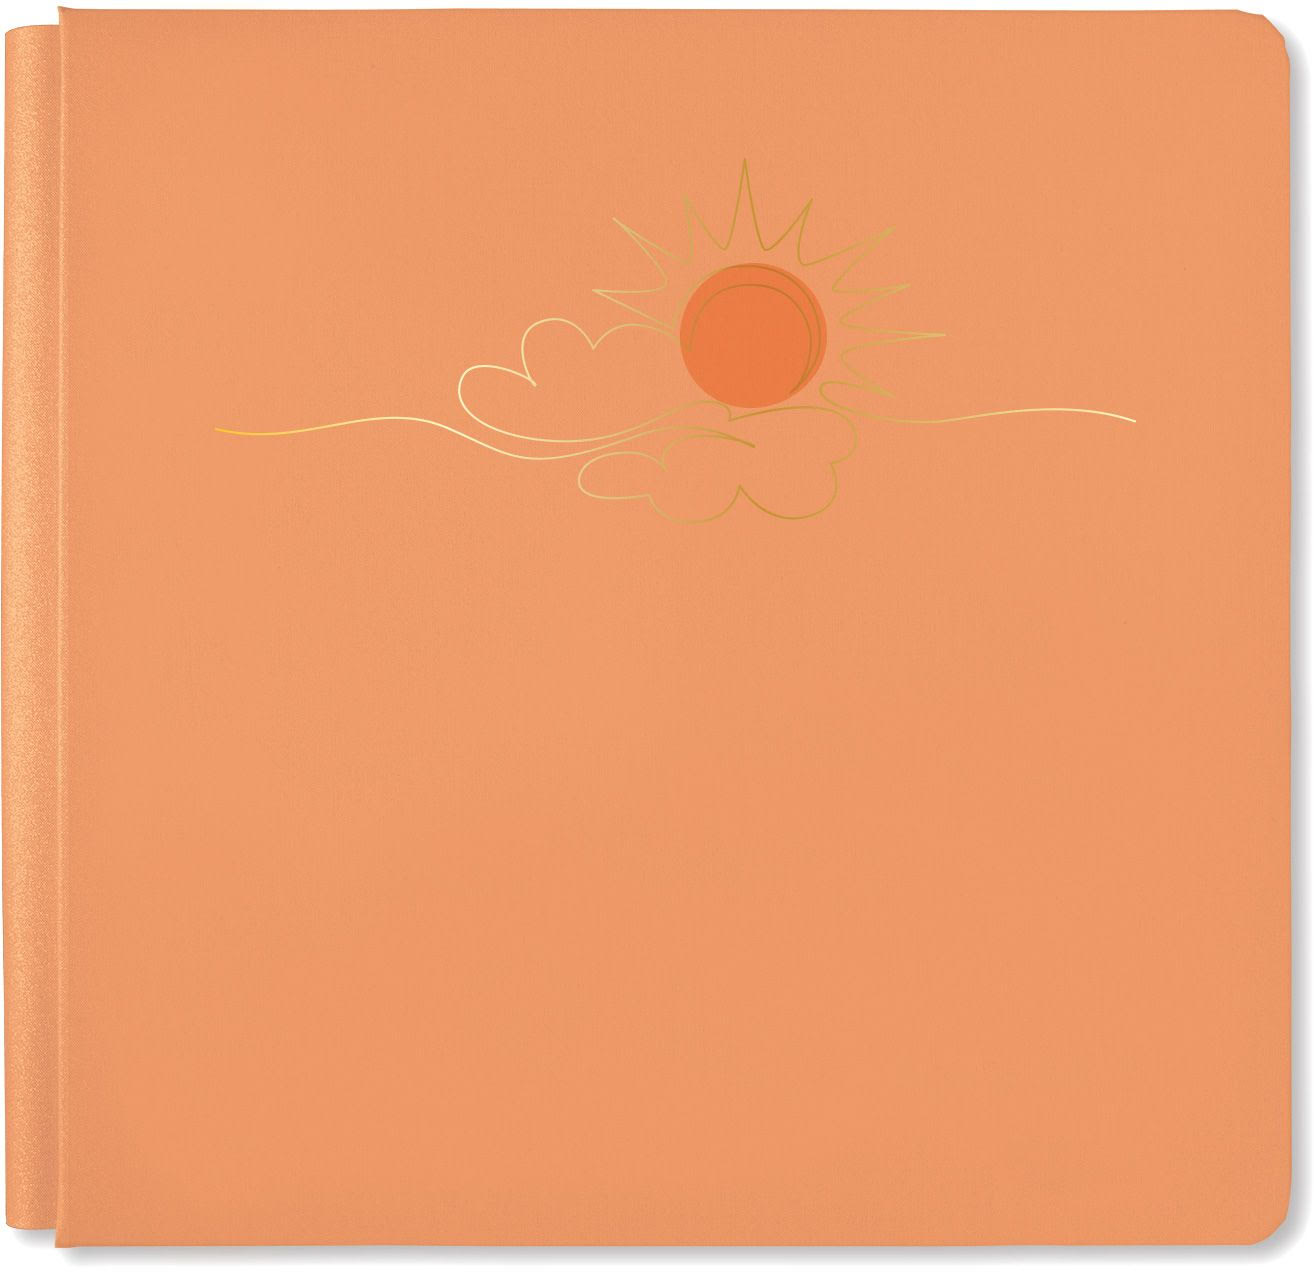 12x12 clementine summer break album cover